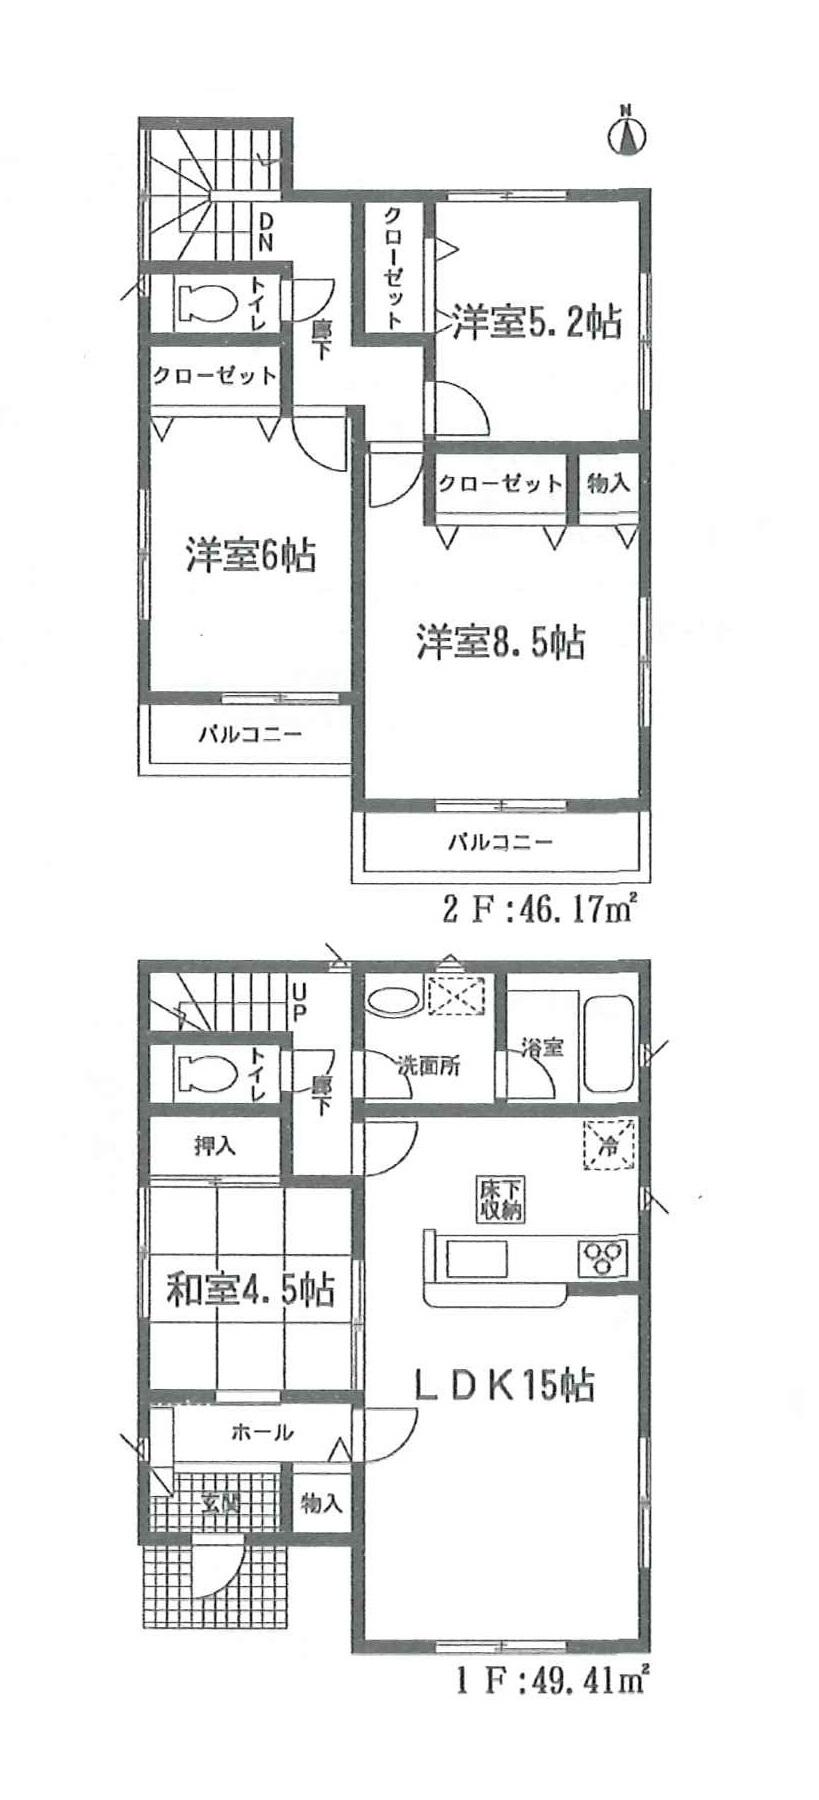 Floor plan. (4 Building), Price 24,800,000 yen, 4LDK, Land area 142.5 sq m , Building area 95.58 sq m